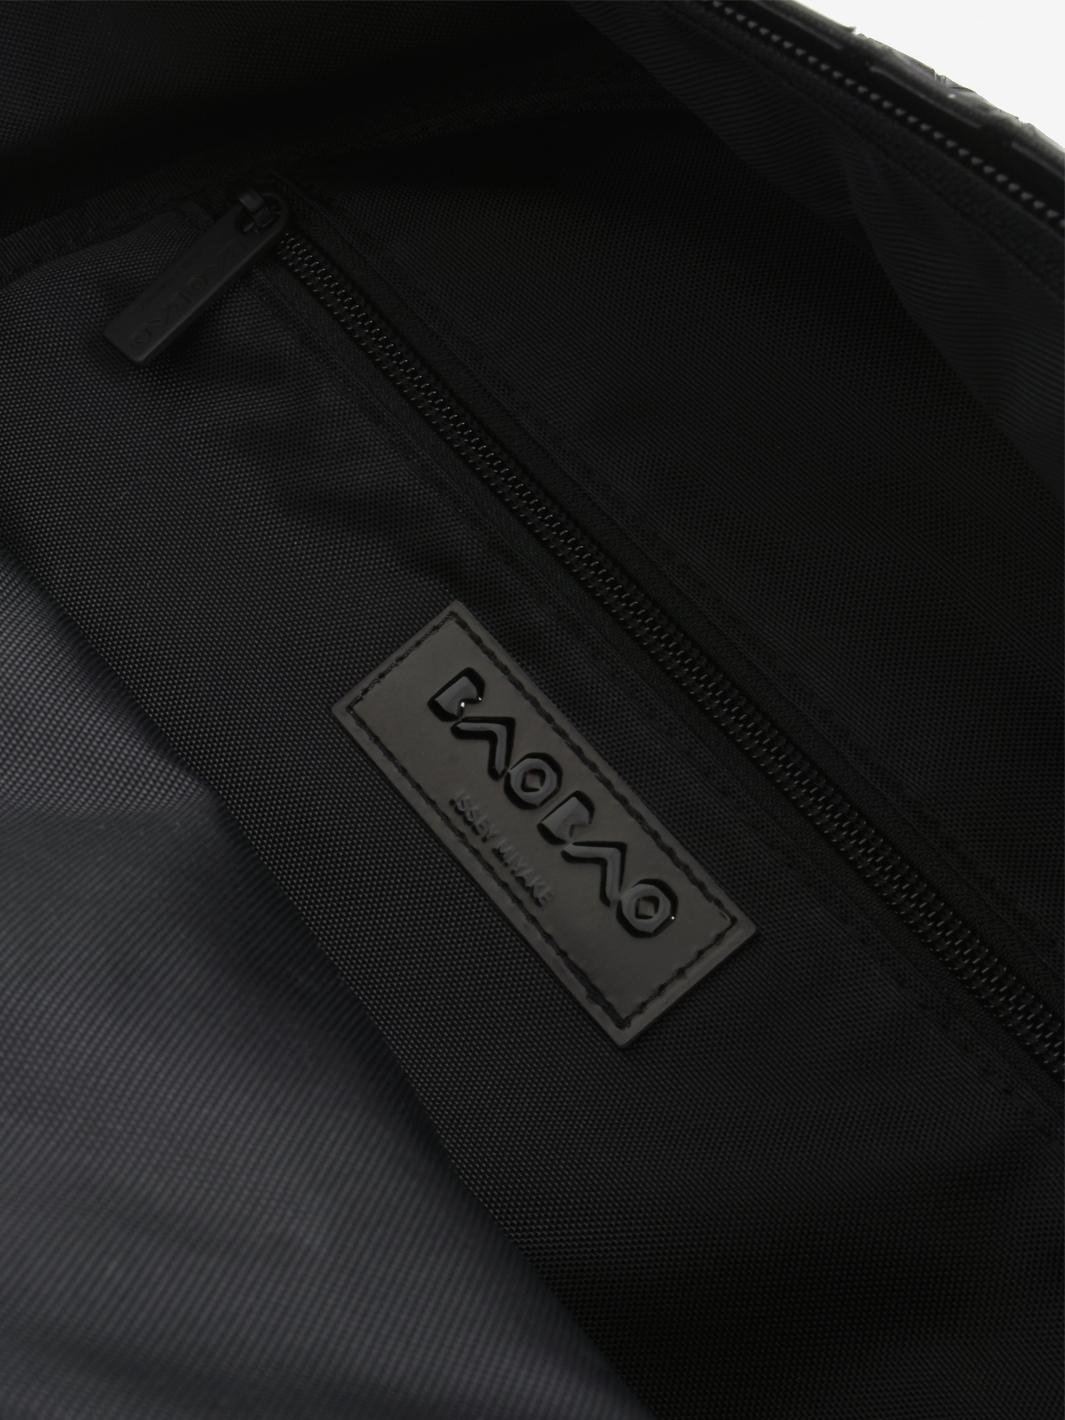 Bao Bao Issey Miyake Backpack For Sale 3